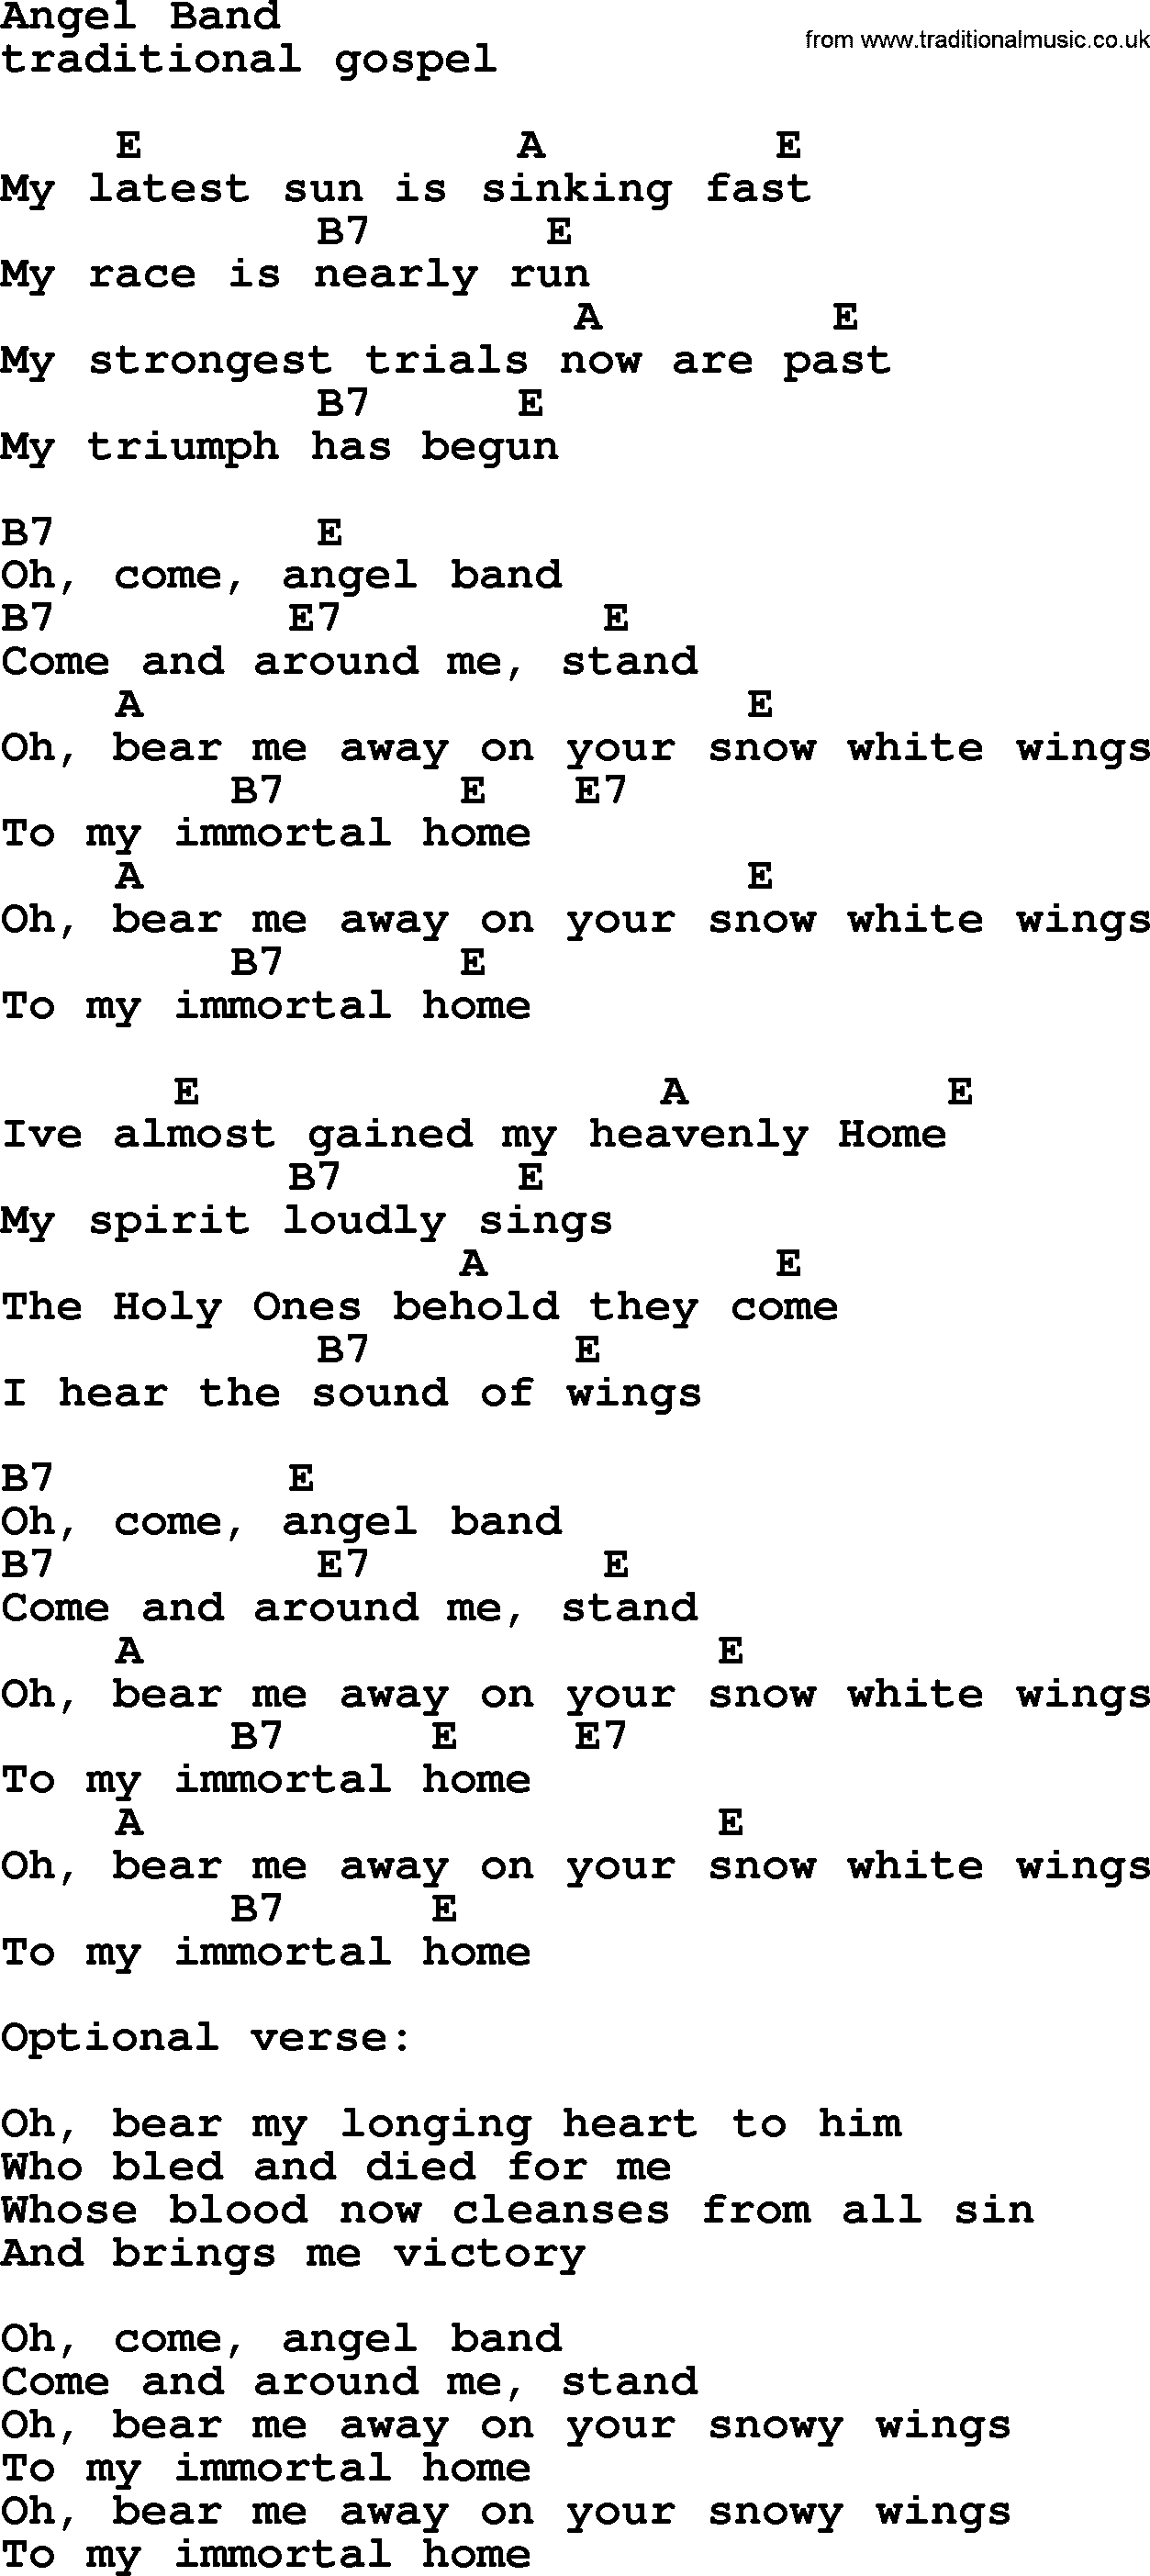 Johnny Cash song Angel Band, lyrics and chords